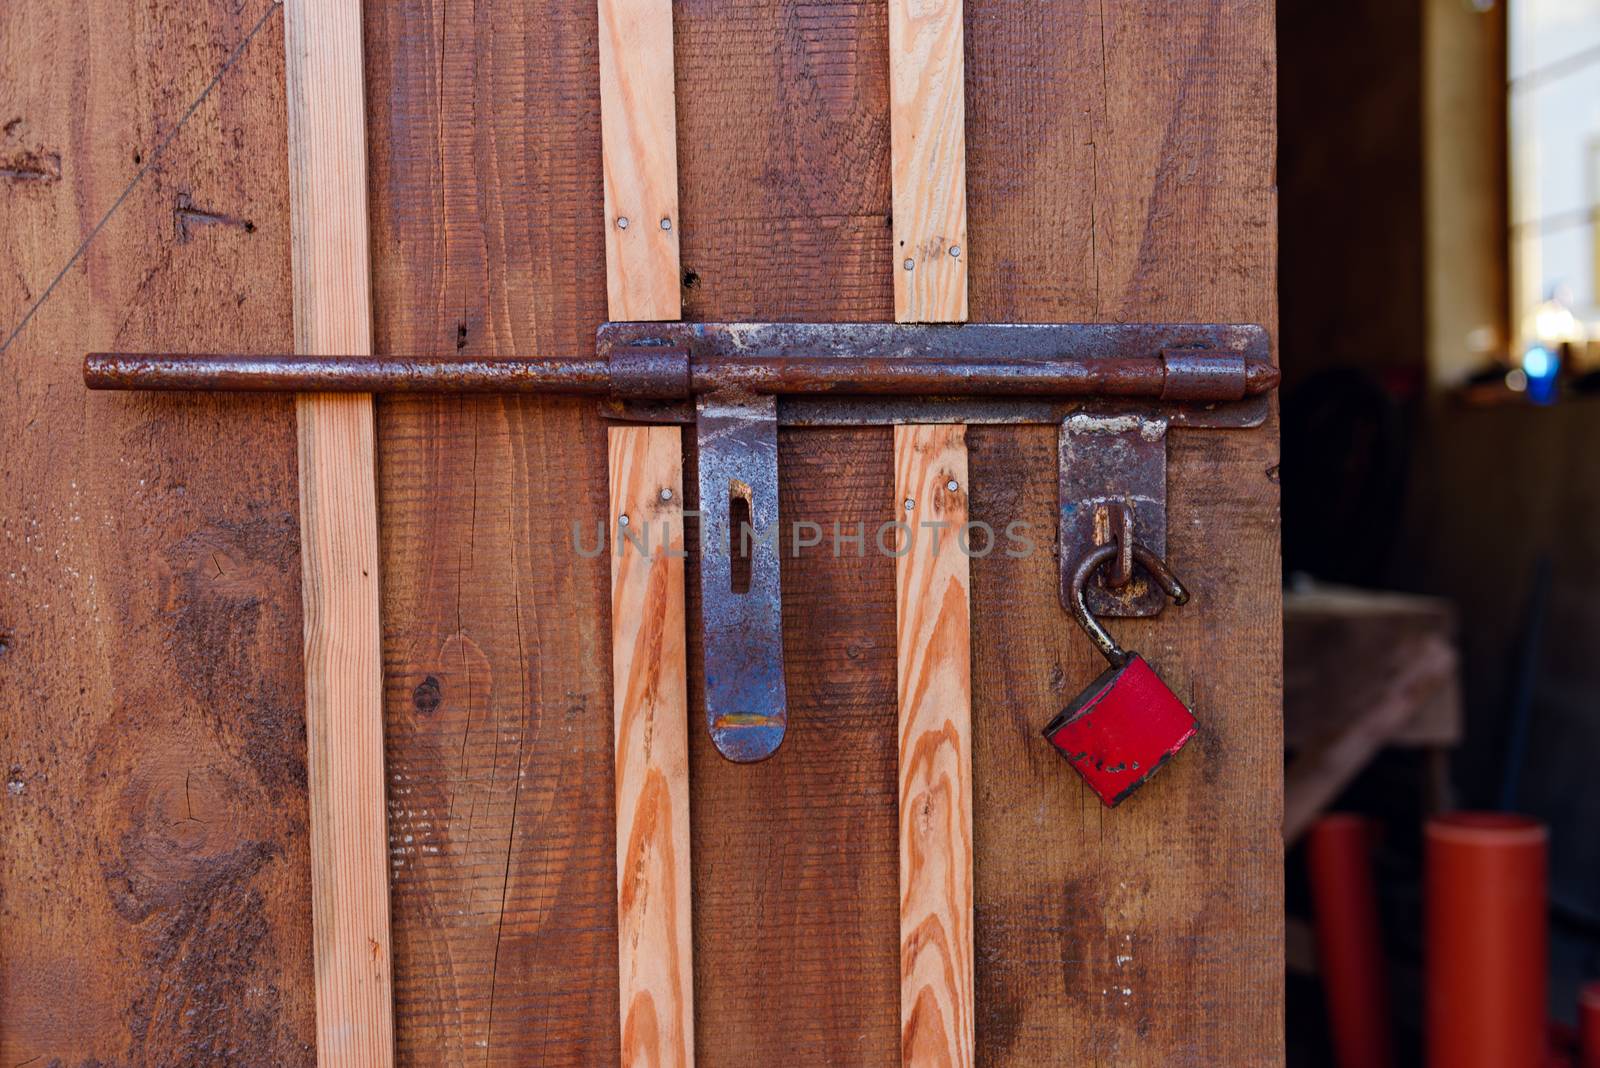 Old red padlock on a wooden door